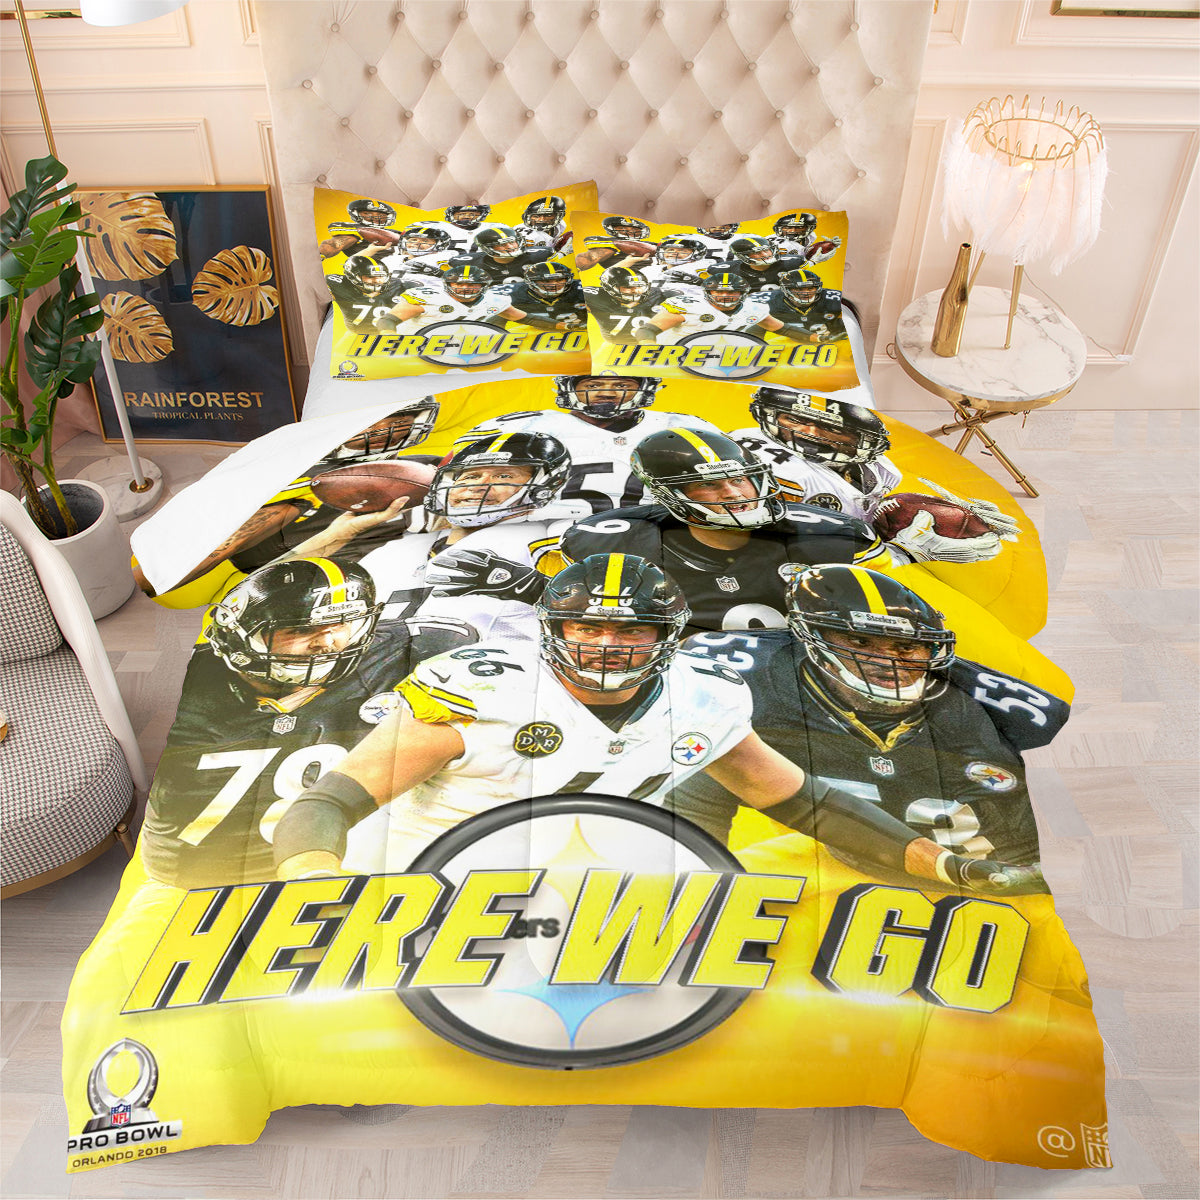 Pittsburgh Steelers Football Team Comforter Pillowcase Sets Blanket All Season Reversible Quilted Duvet